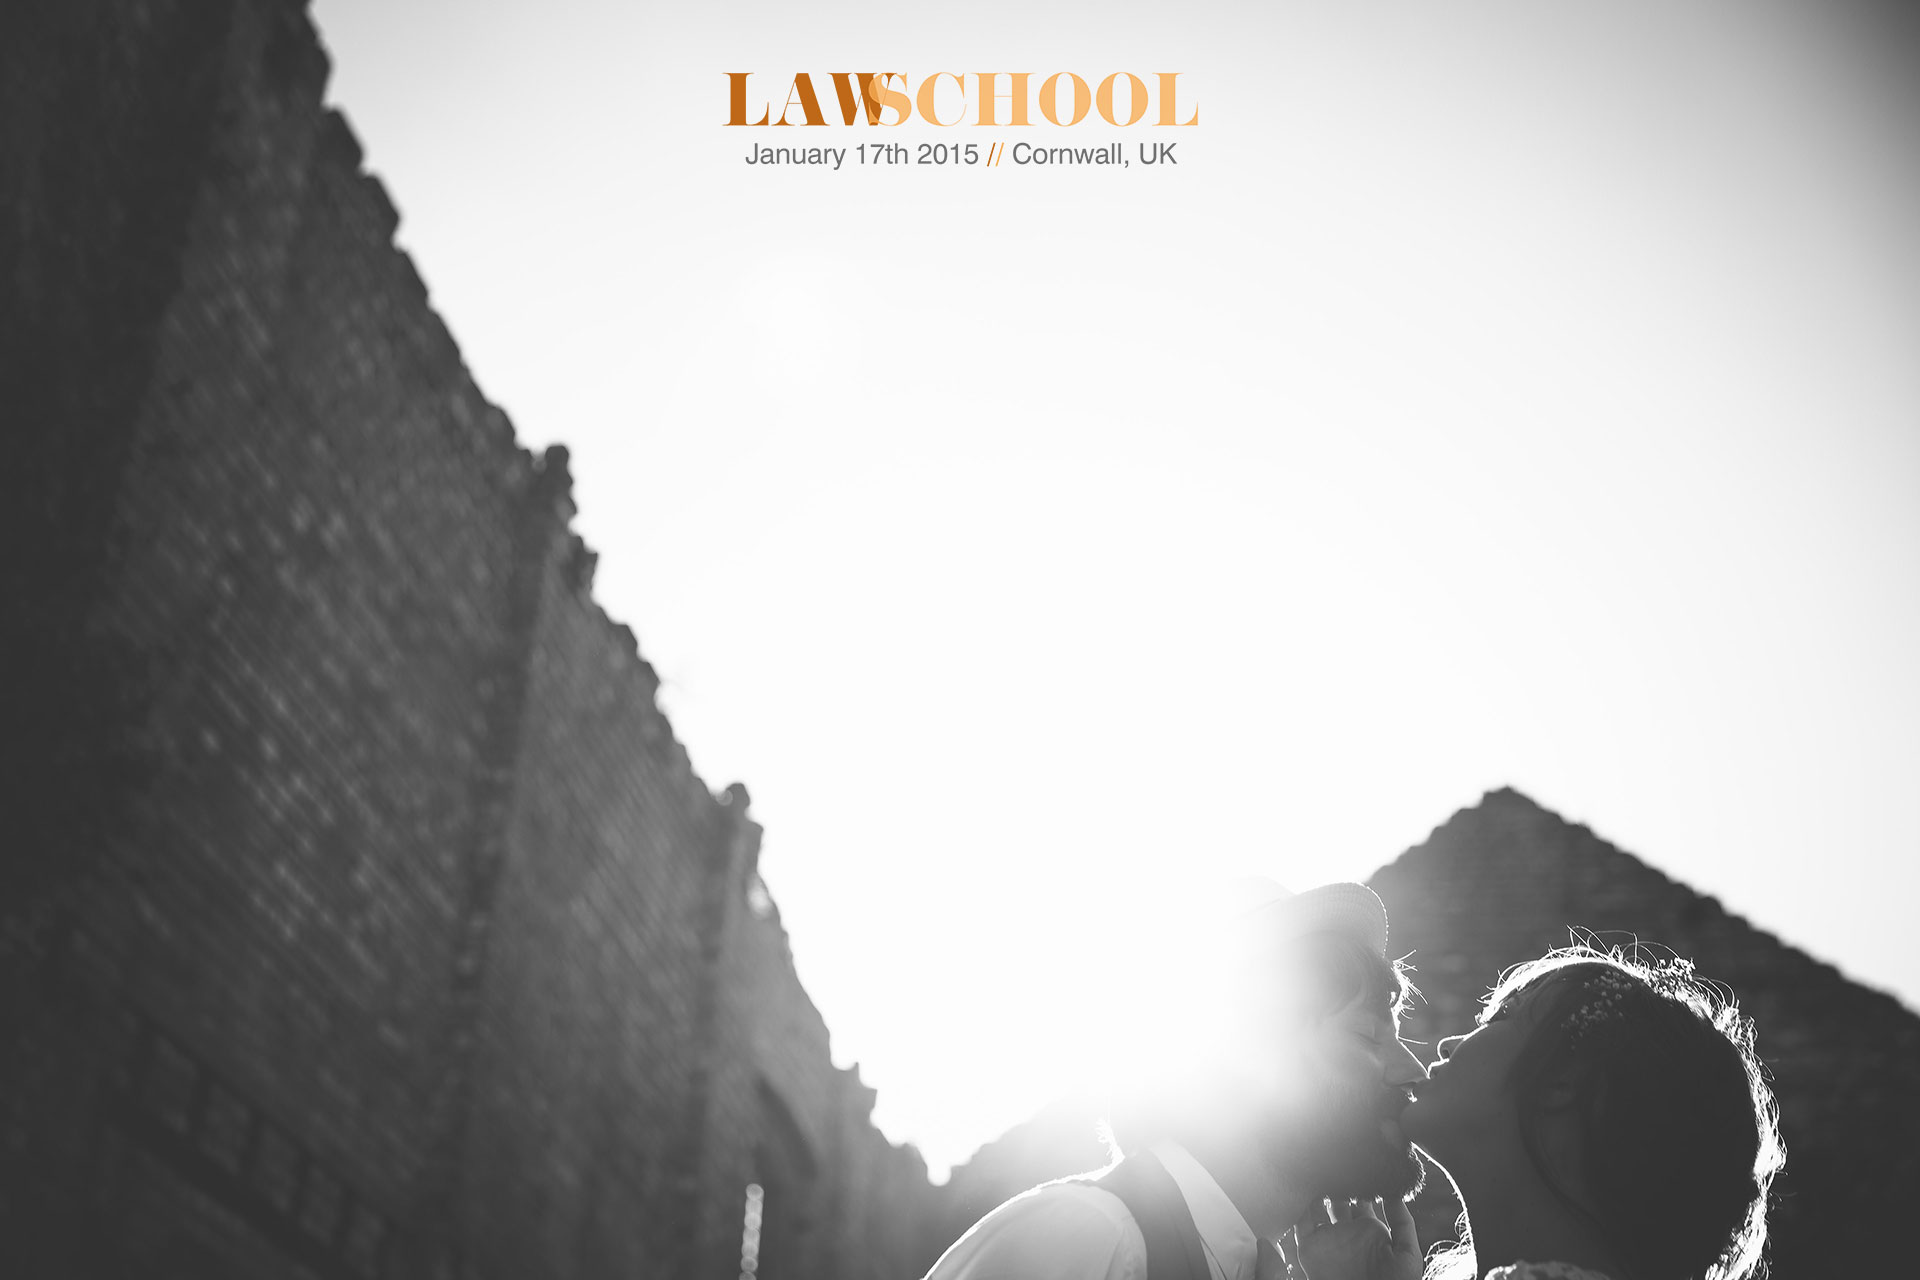 Law School / Wedding Photography Workshop / Jan 17th 2015 / Cornwall, UK